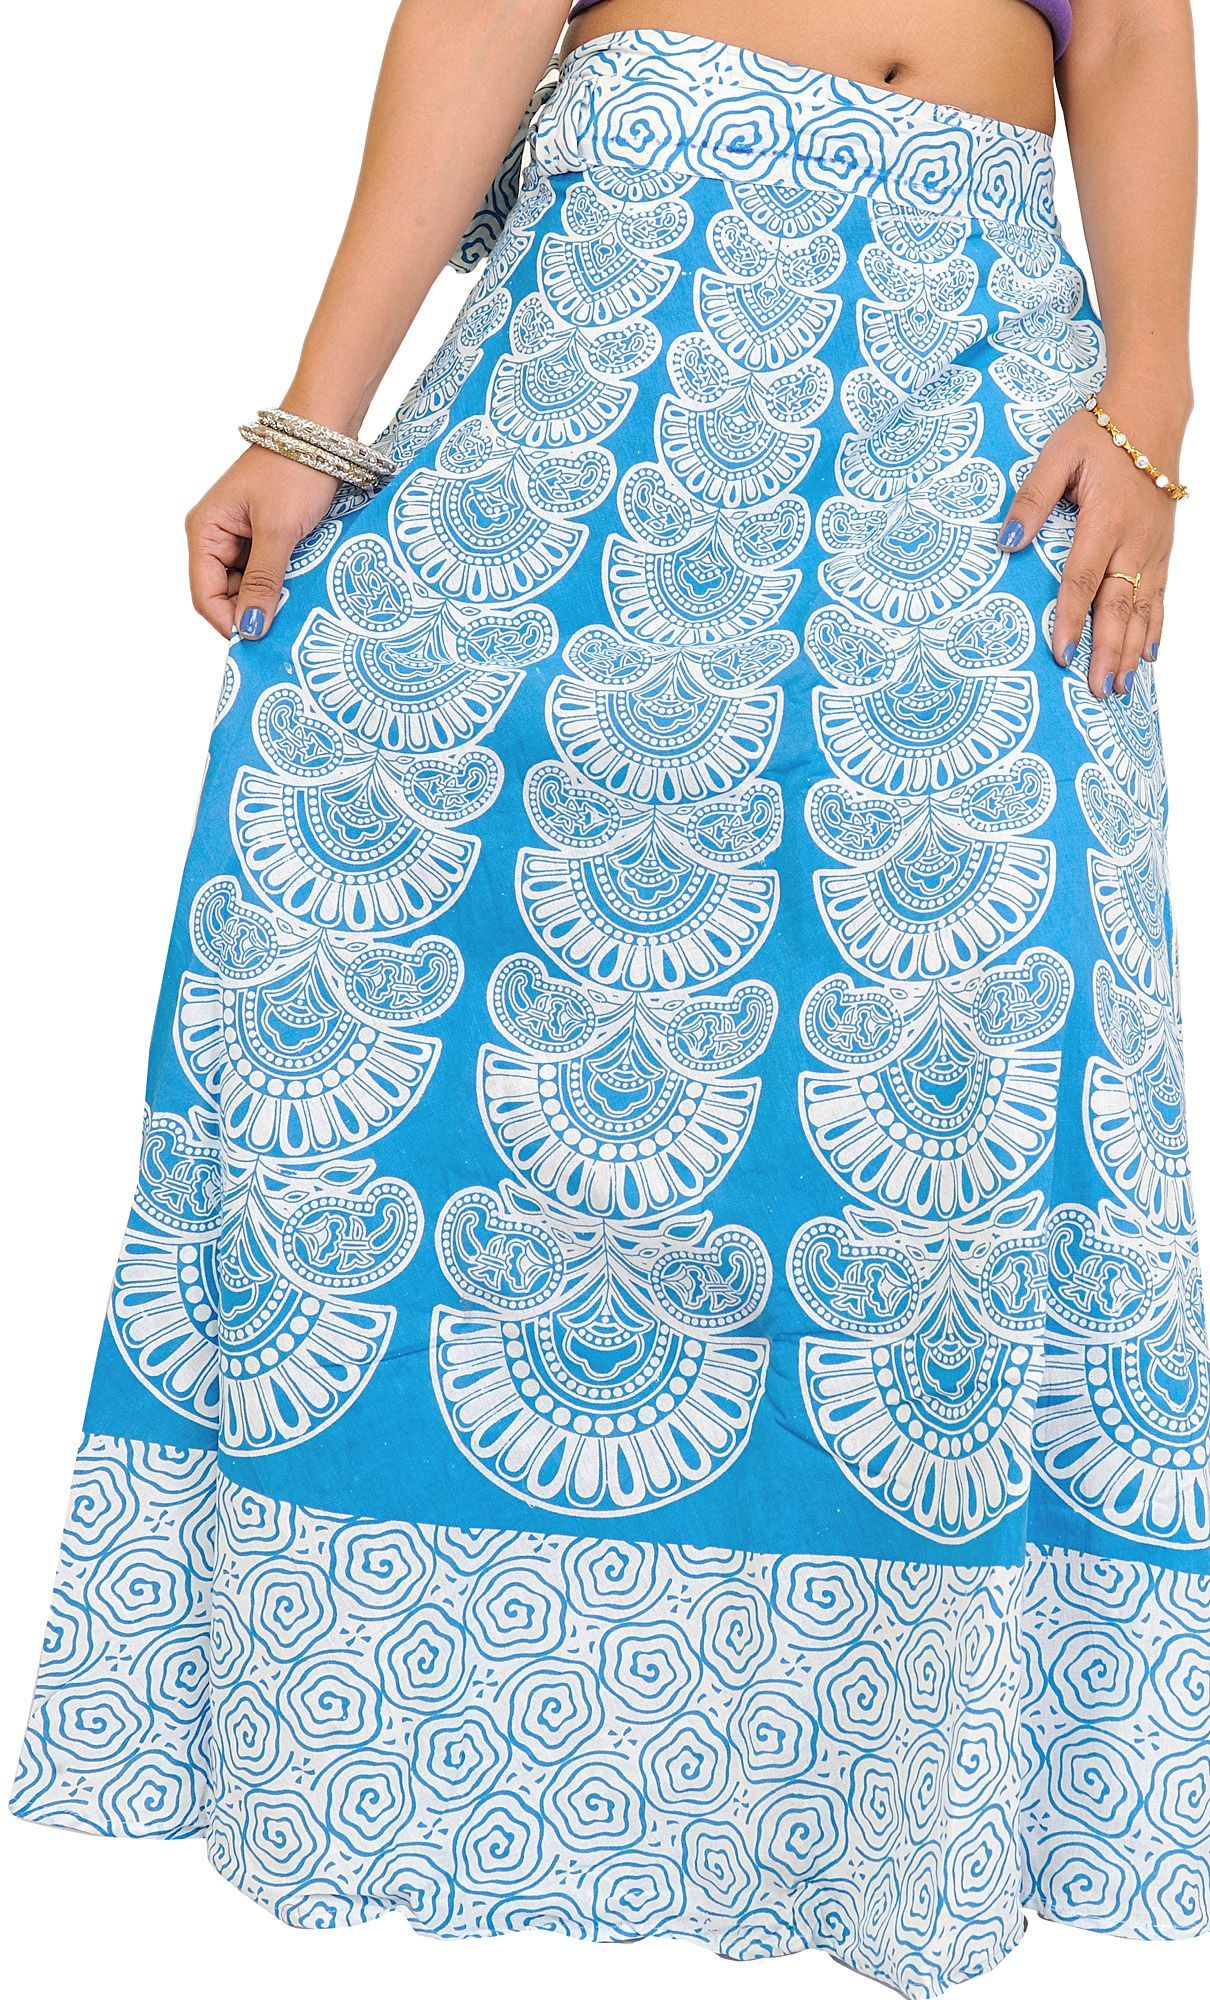 Methyl-Blue Wrap-Around Long Skirt with Block-Print in Pastel Colors